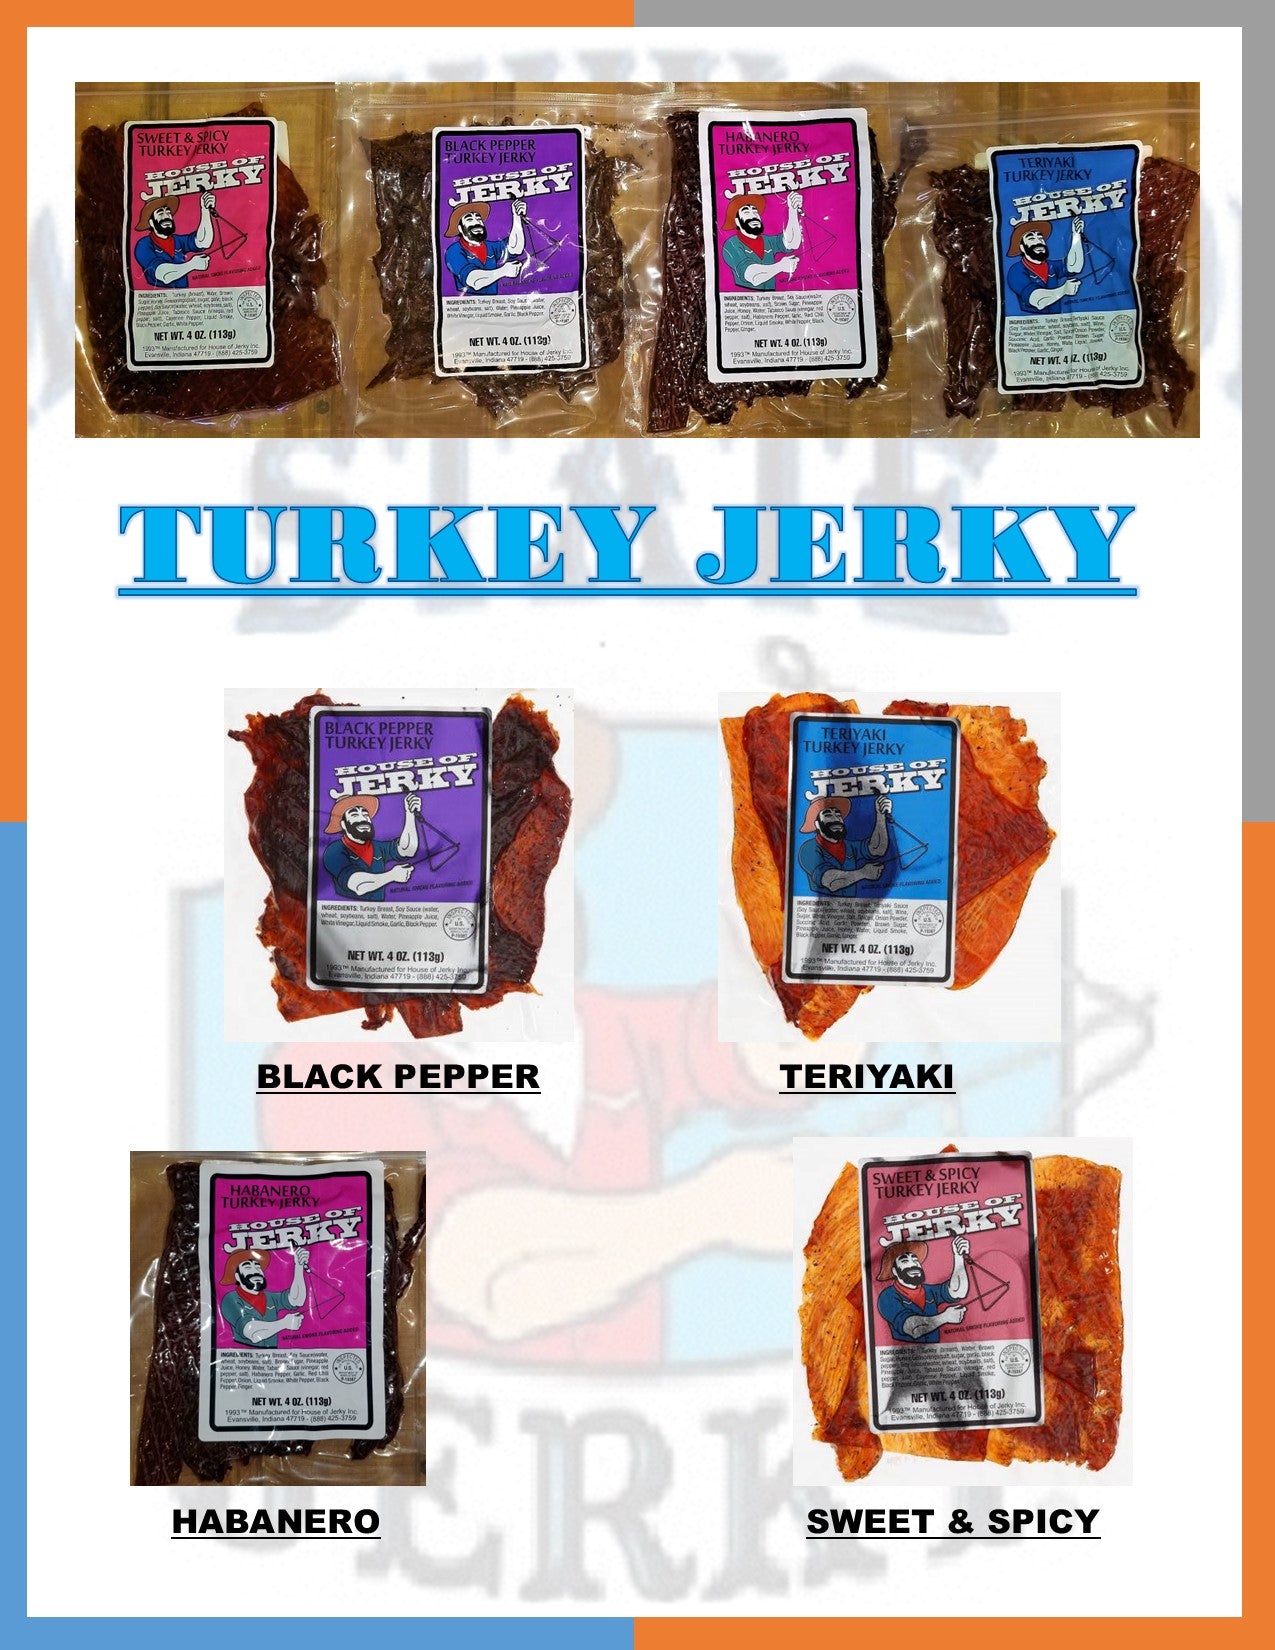 Washington State Jerky - Turkey Jerky Menu